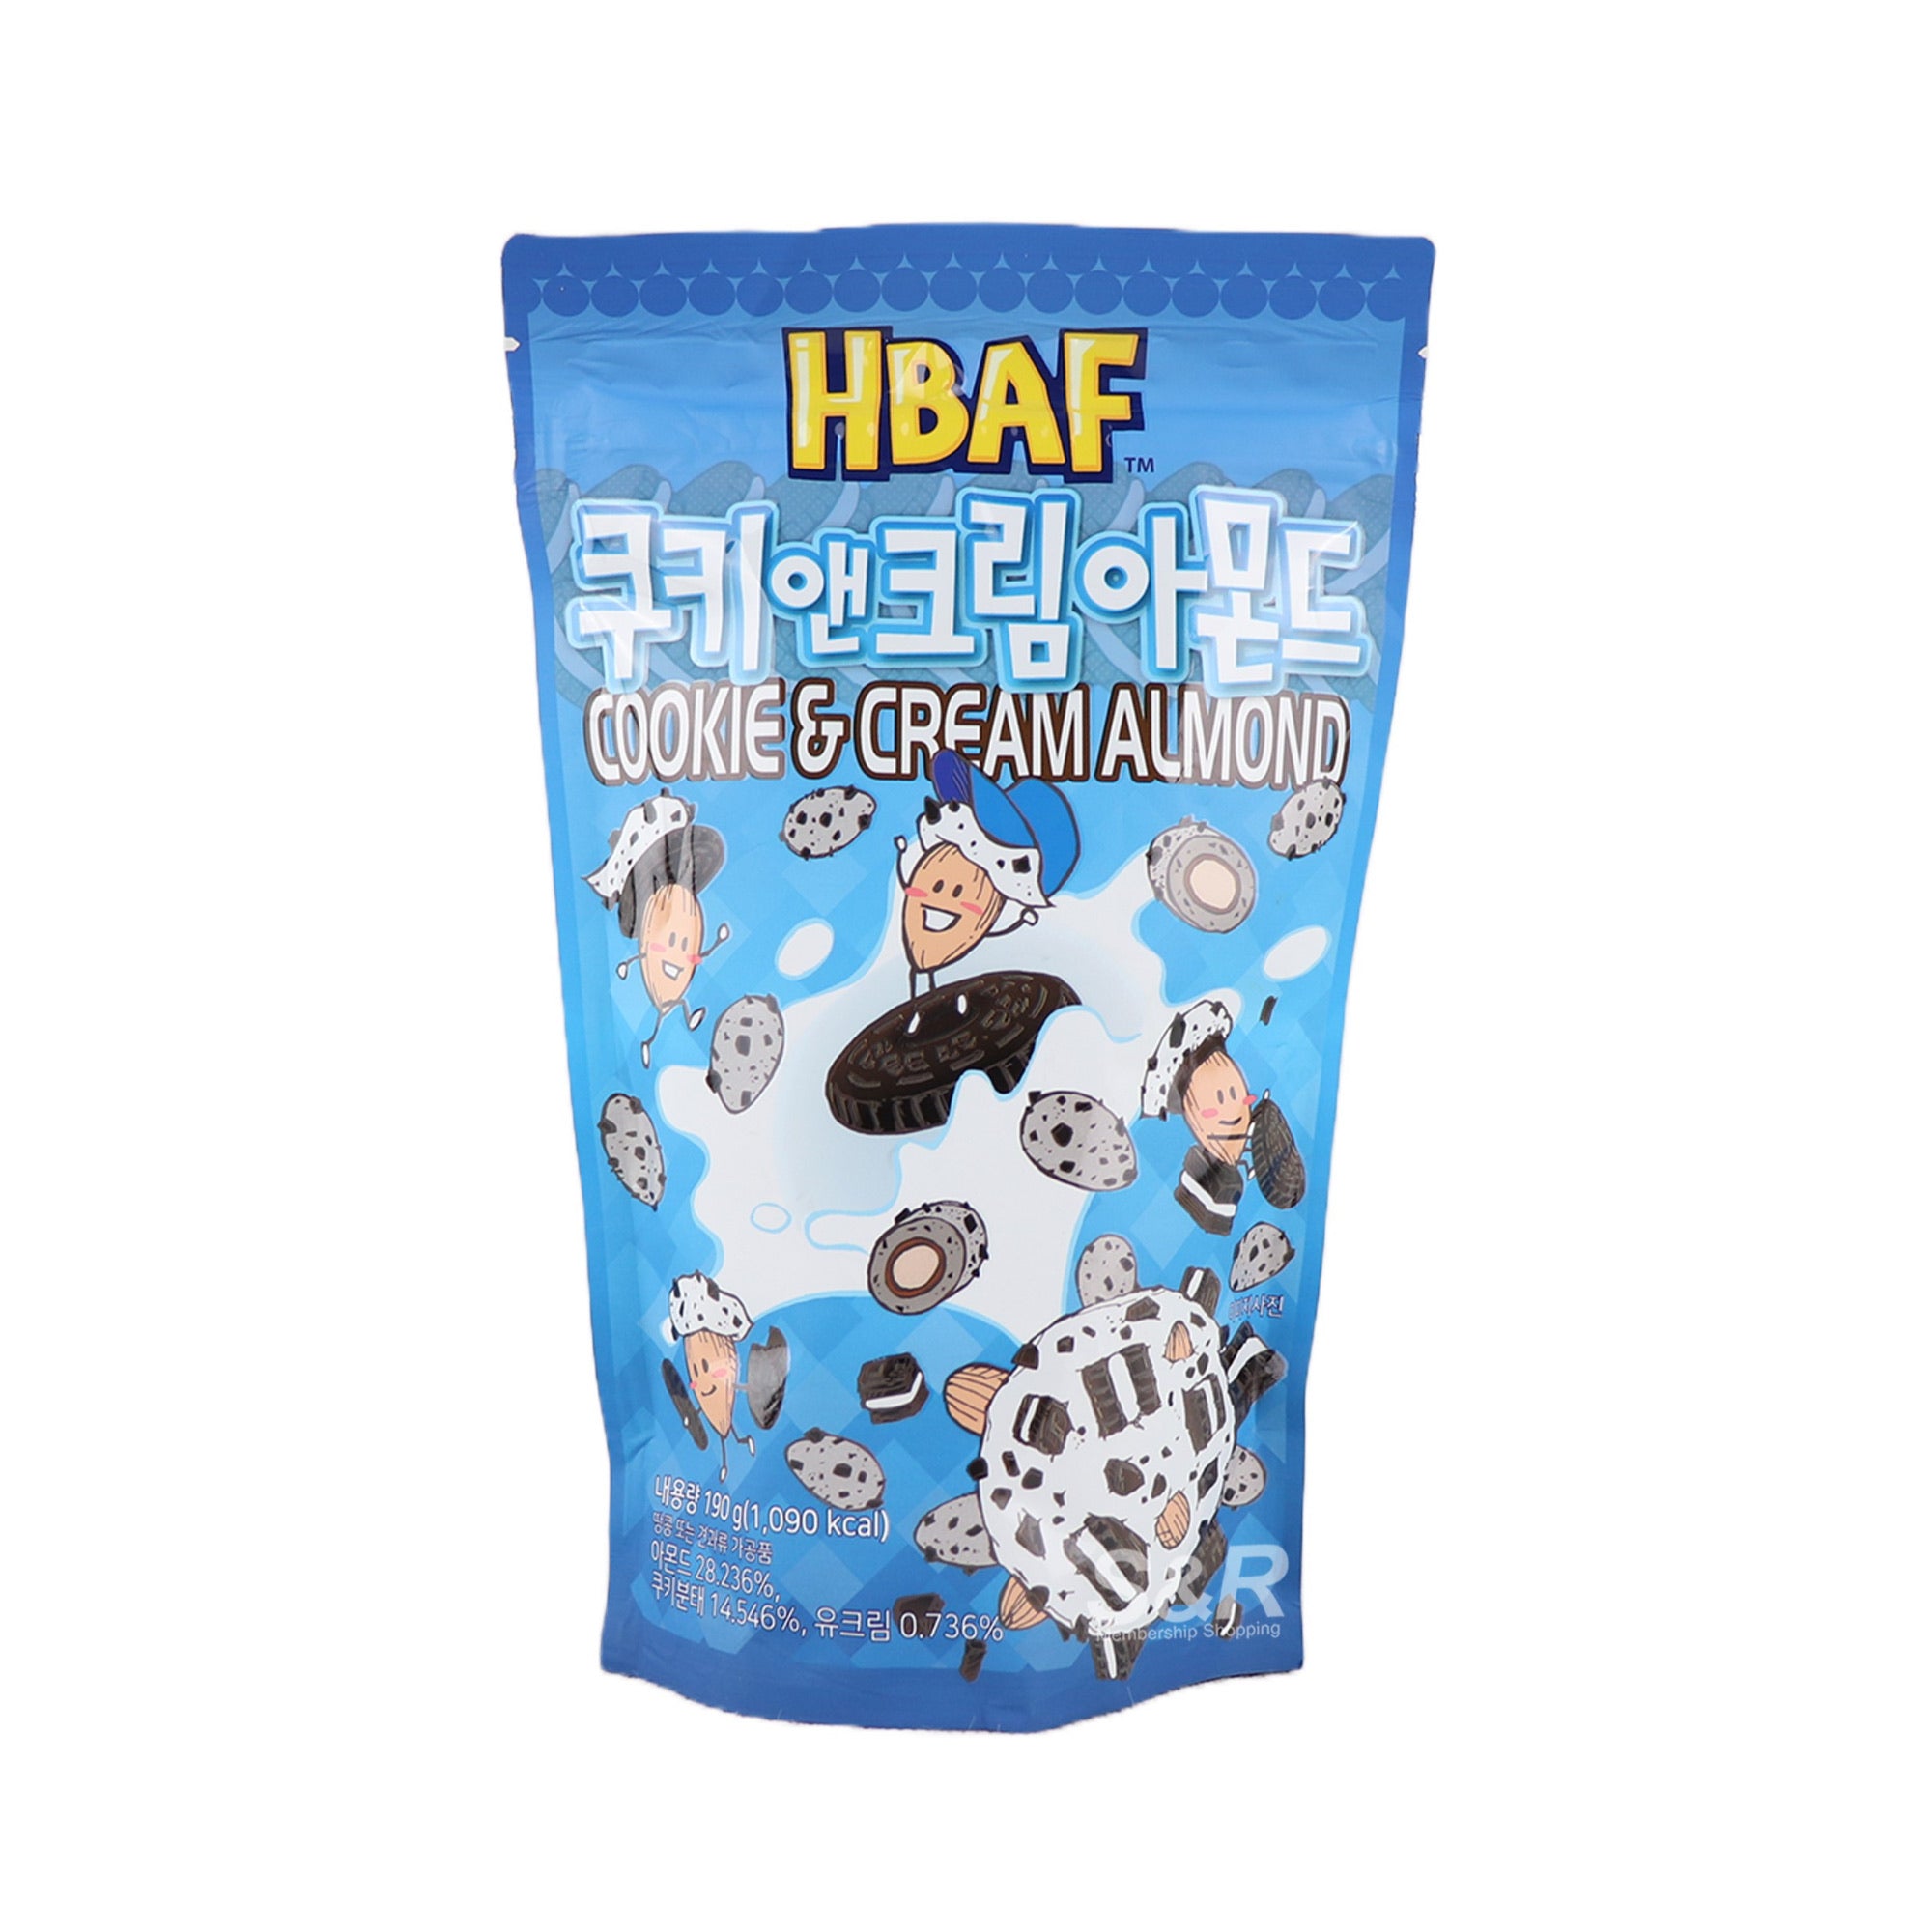 HBAF Cookie and Cream Almond - 190g/6.7oz